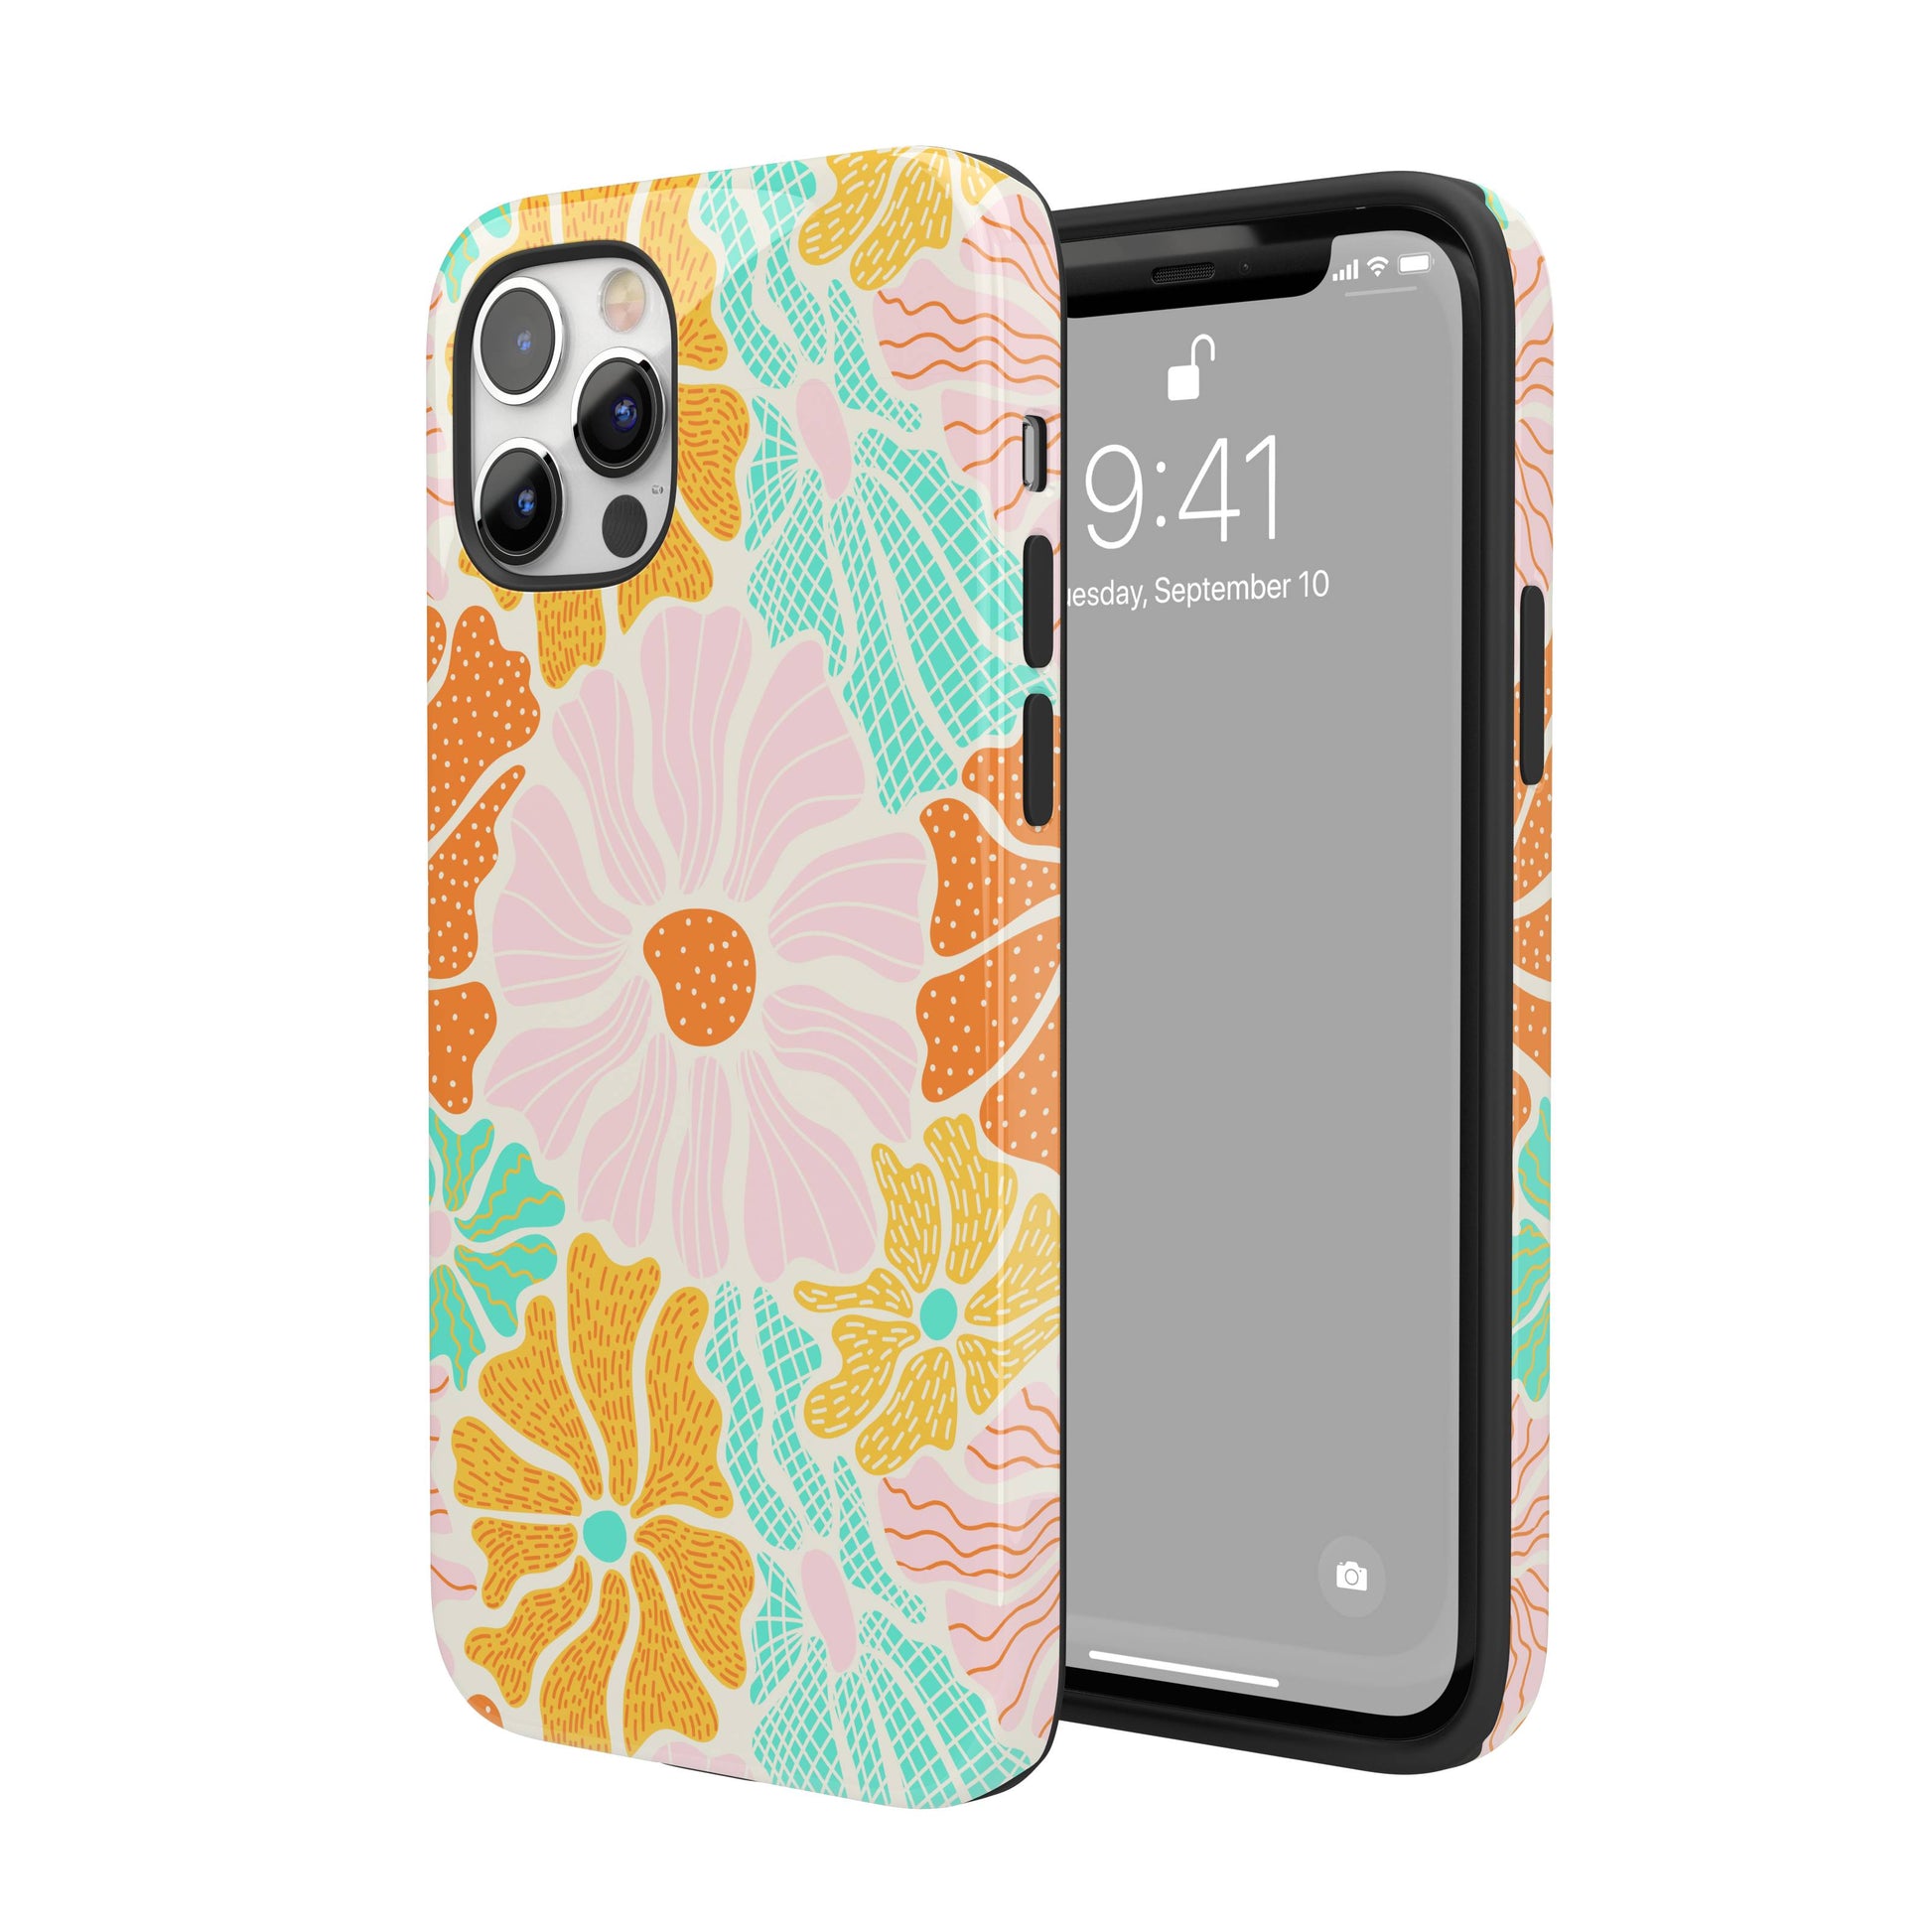 Neon Garden iPhone Case